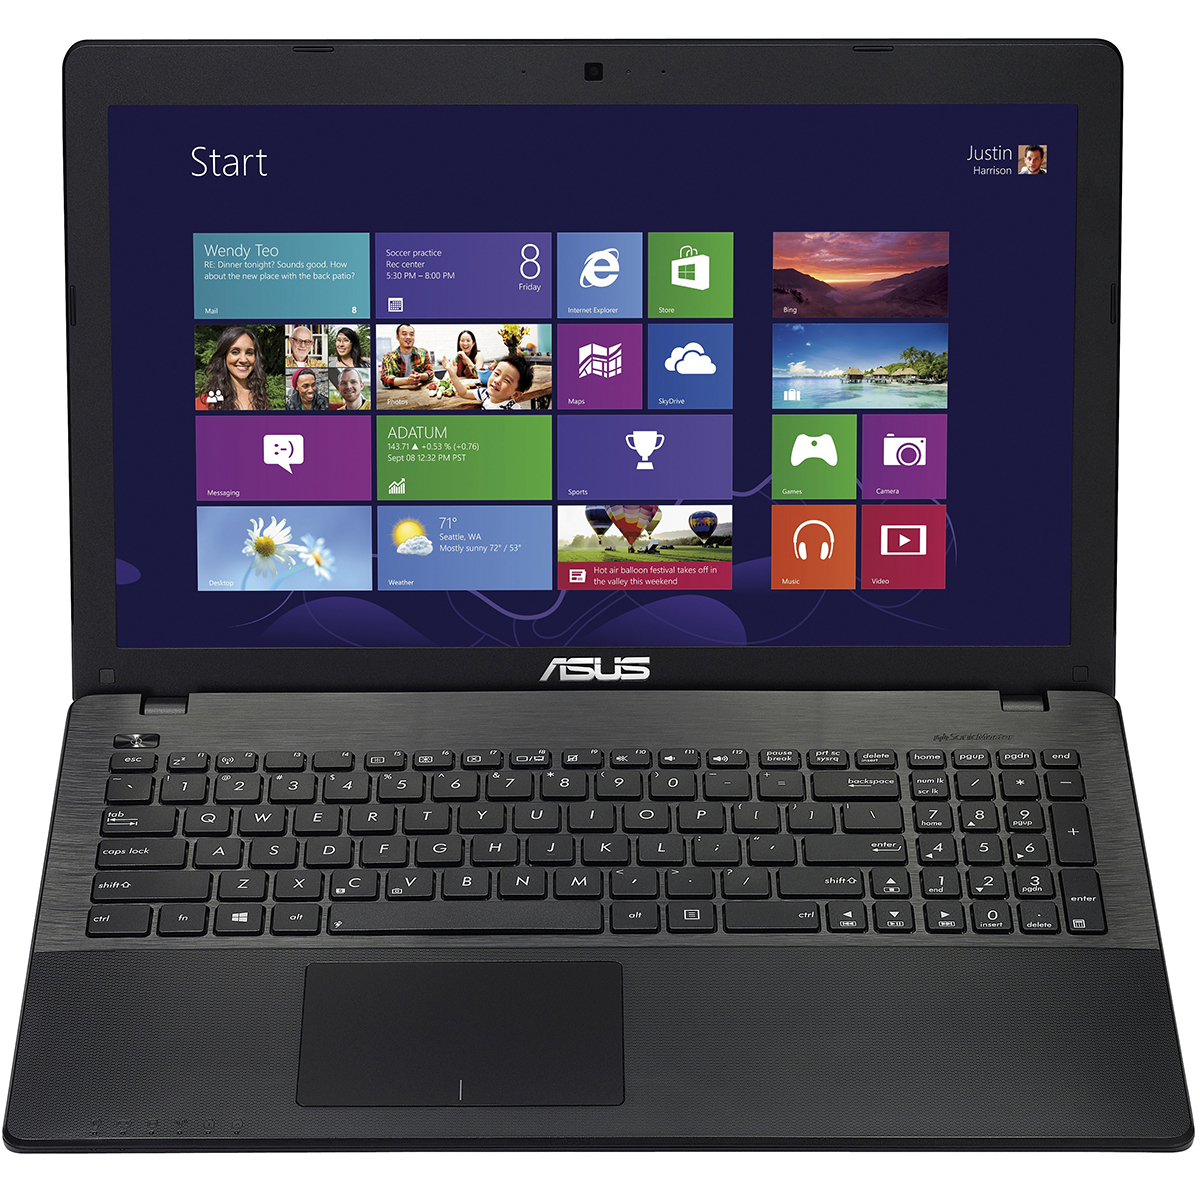 Laptop Asus X552LDV-SX470D - Intel Core i5-4210U 1.7GHz, 4GBRAM, 500GB HDD, VGA nVidia GeForce GT820M 1GB, 15.6 inch